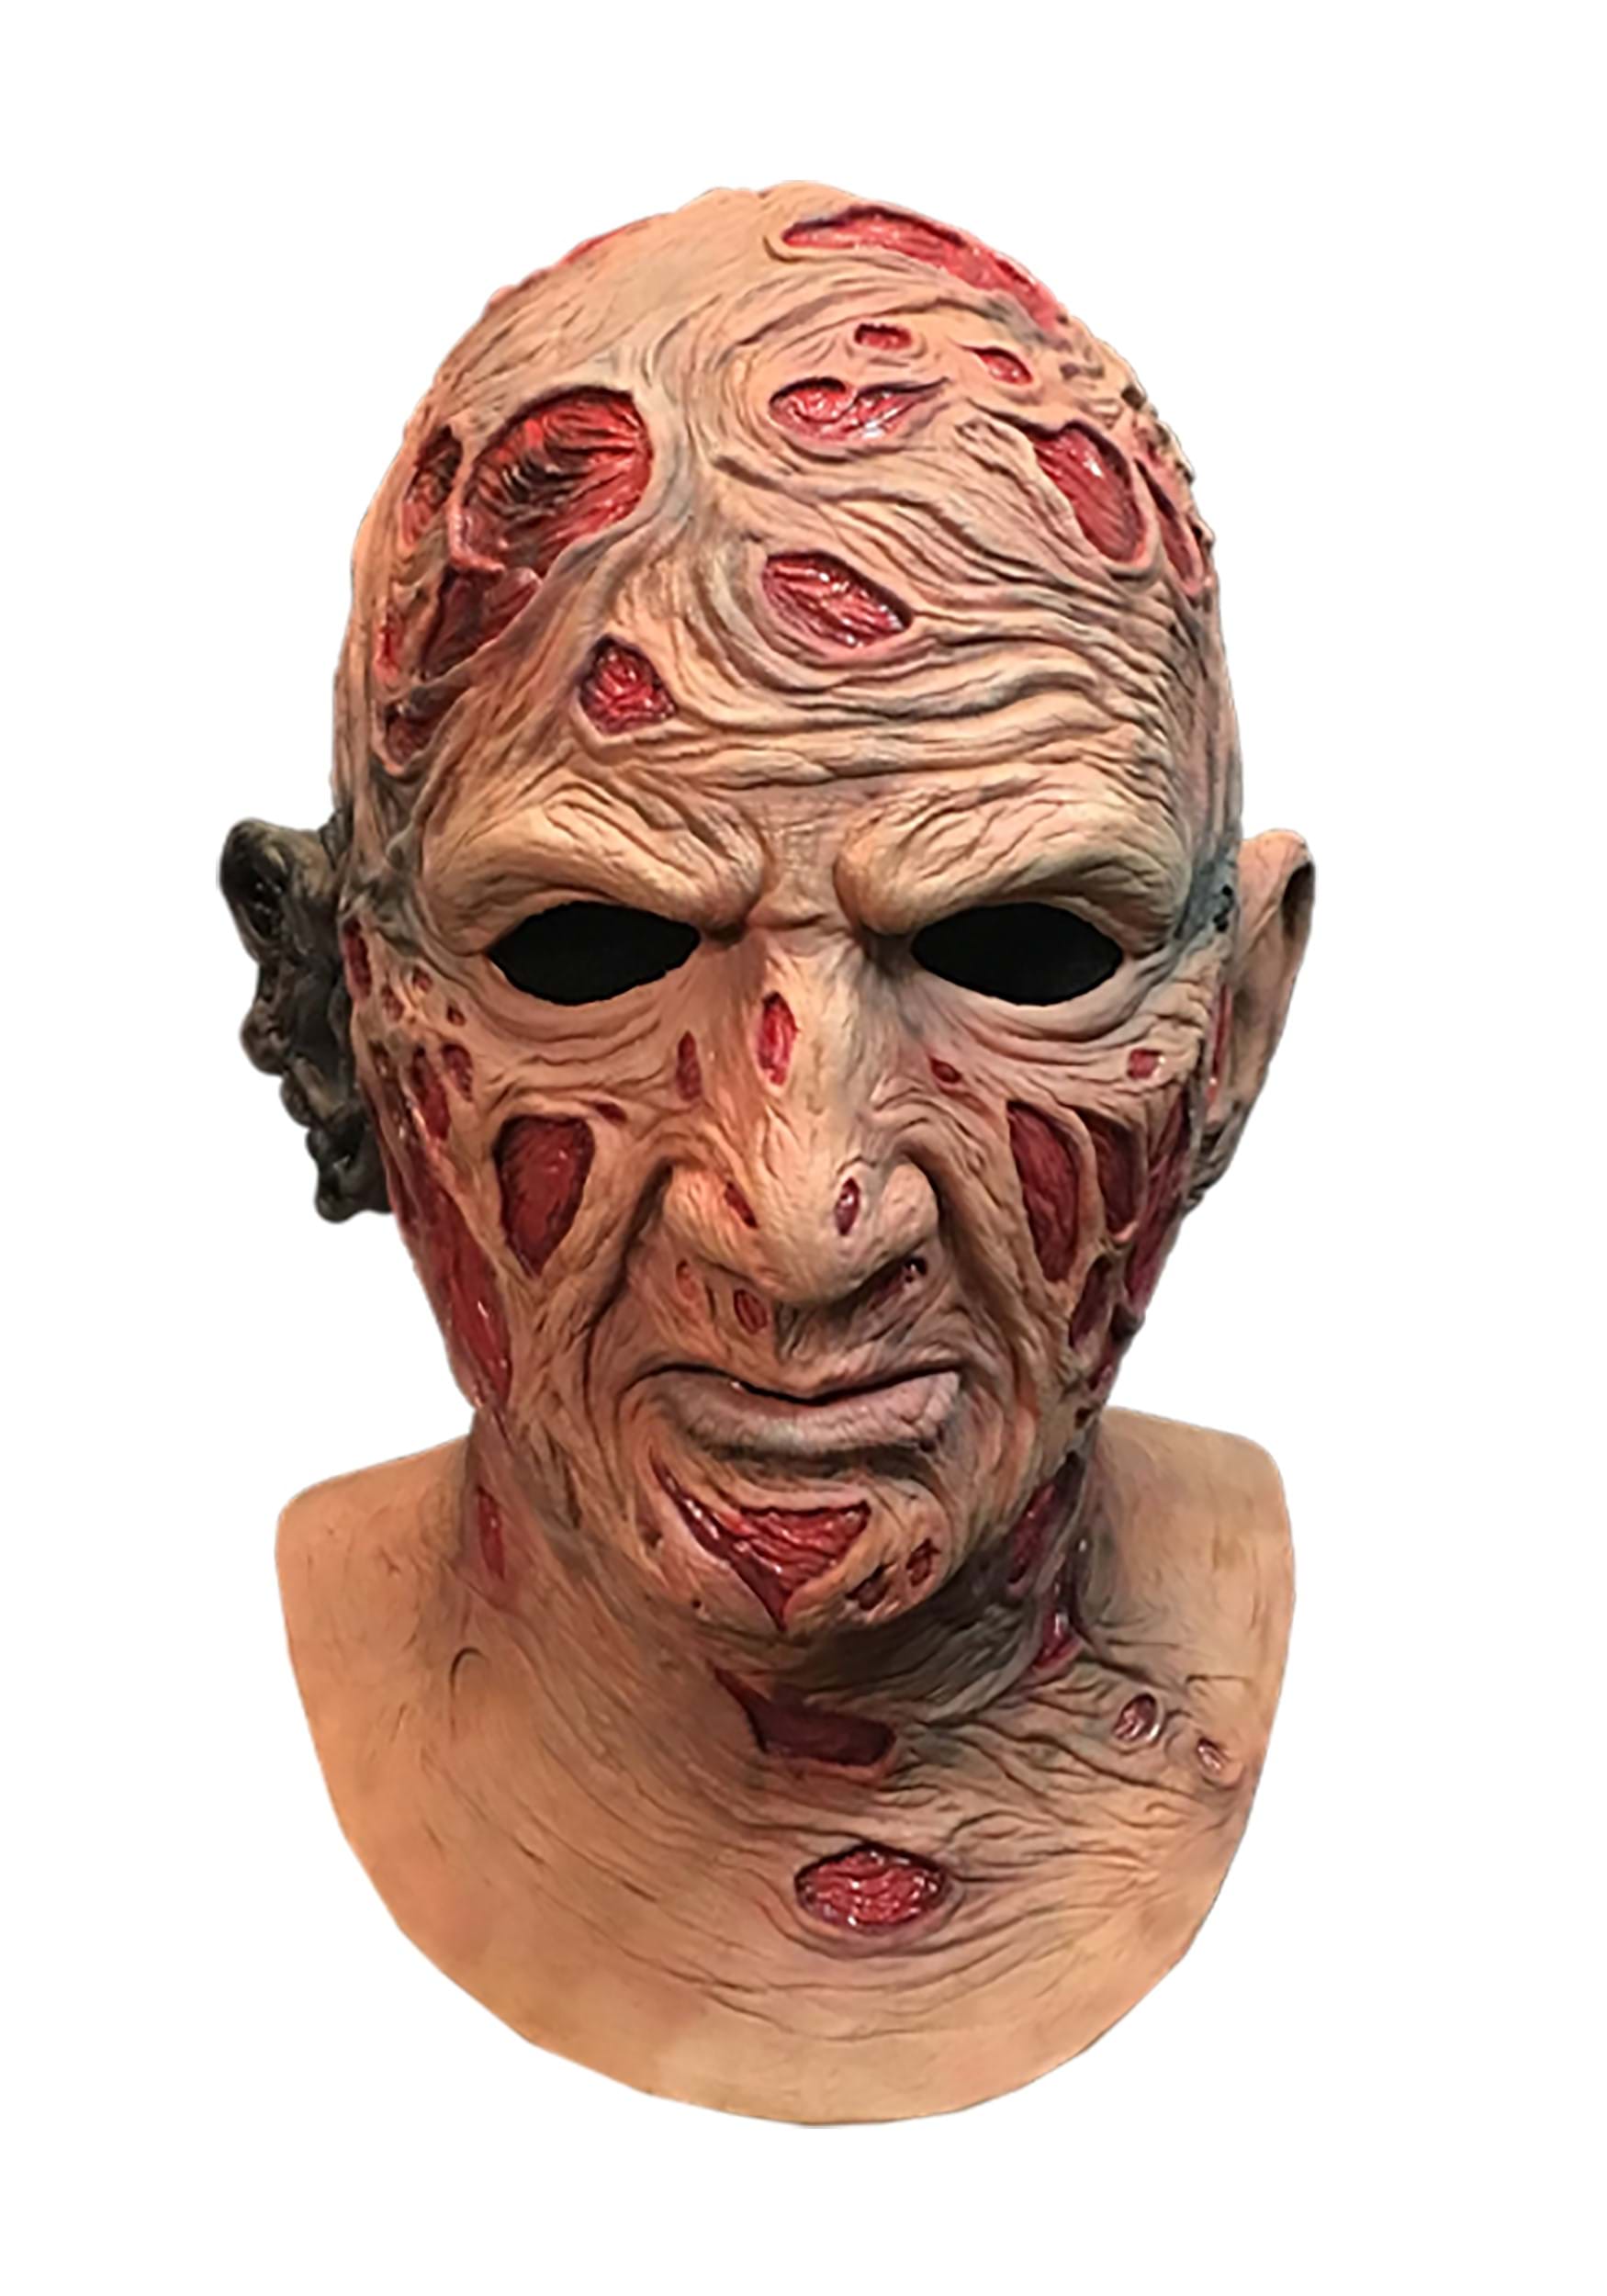 A Nightmare on Elm Street Mask Springwood Slasher